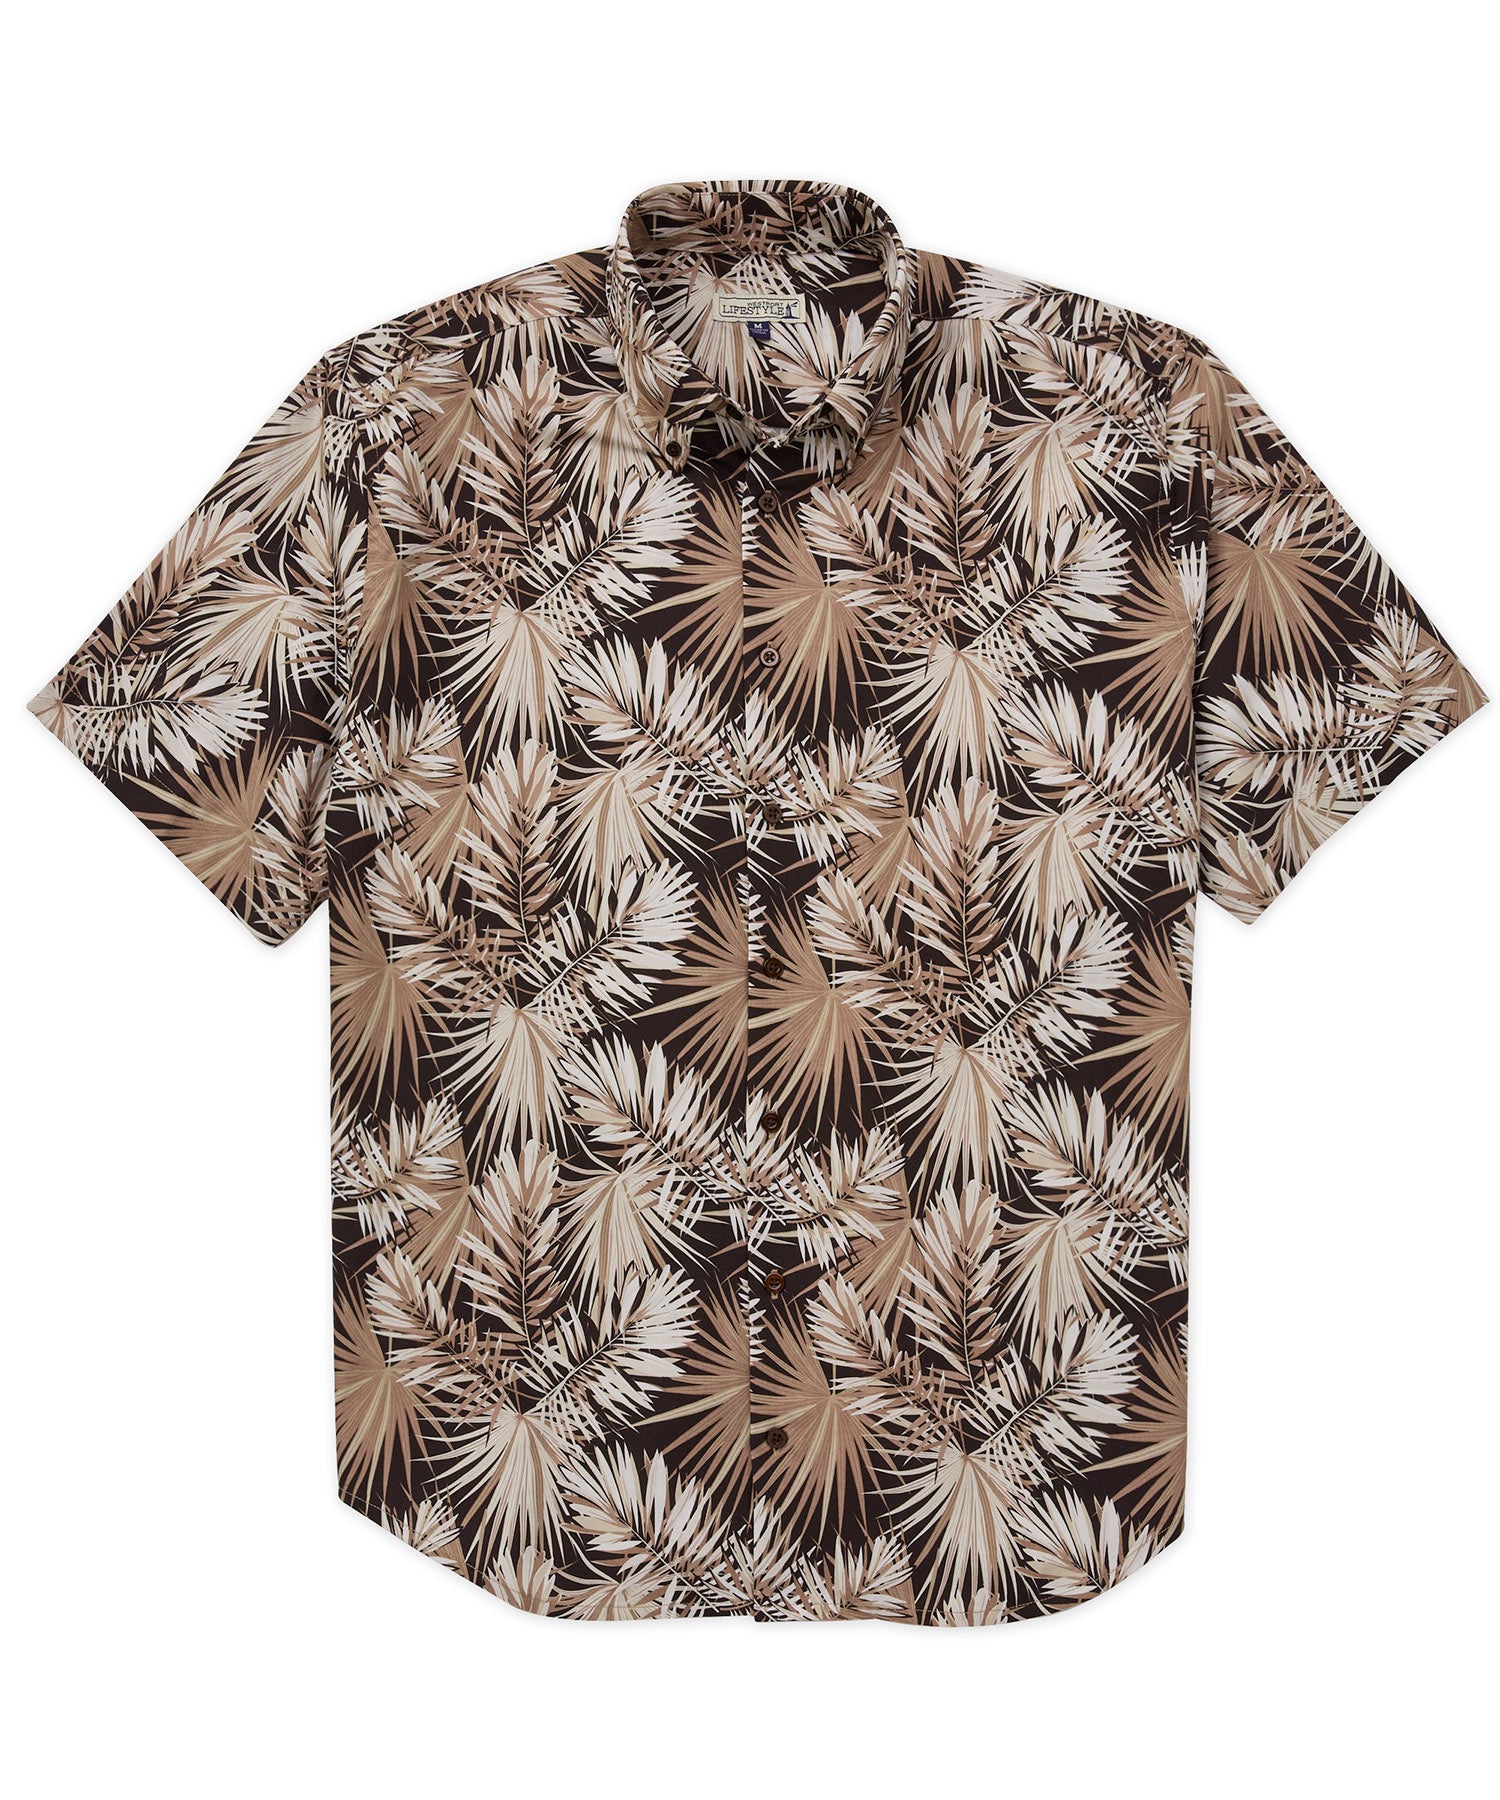 Westport Lifestyle Short Sleeve Tropical Leaves Print Sport Shirt, Men's Big & Tall